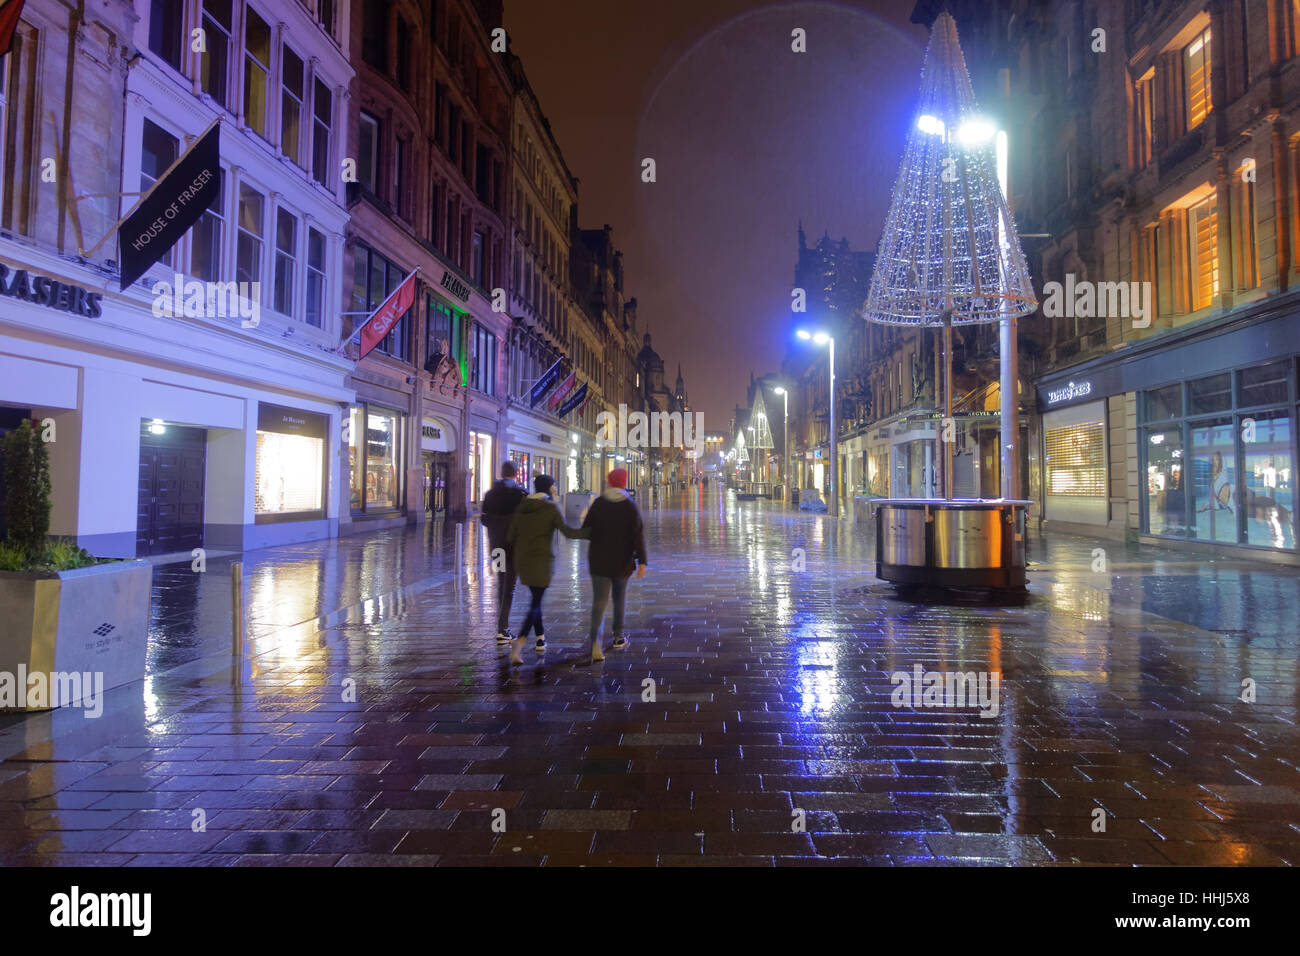 night raining weather for Glasgow on Buchanan Street Stock Photo